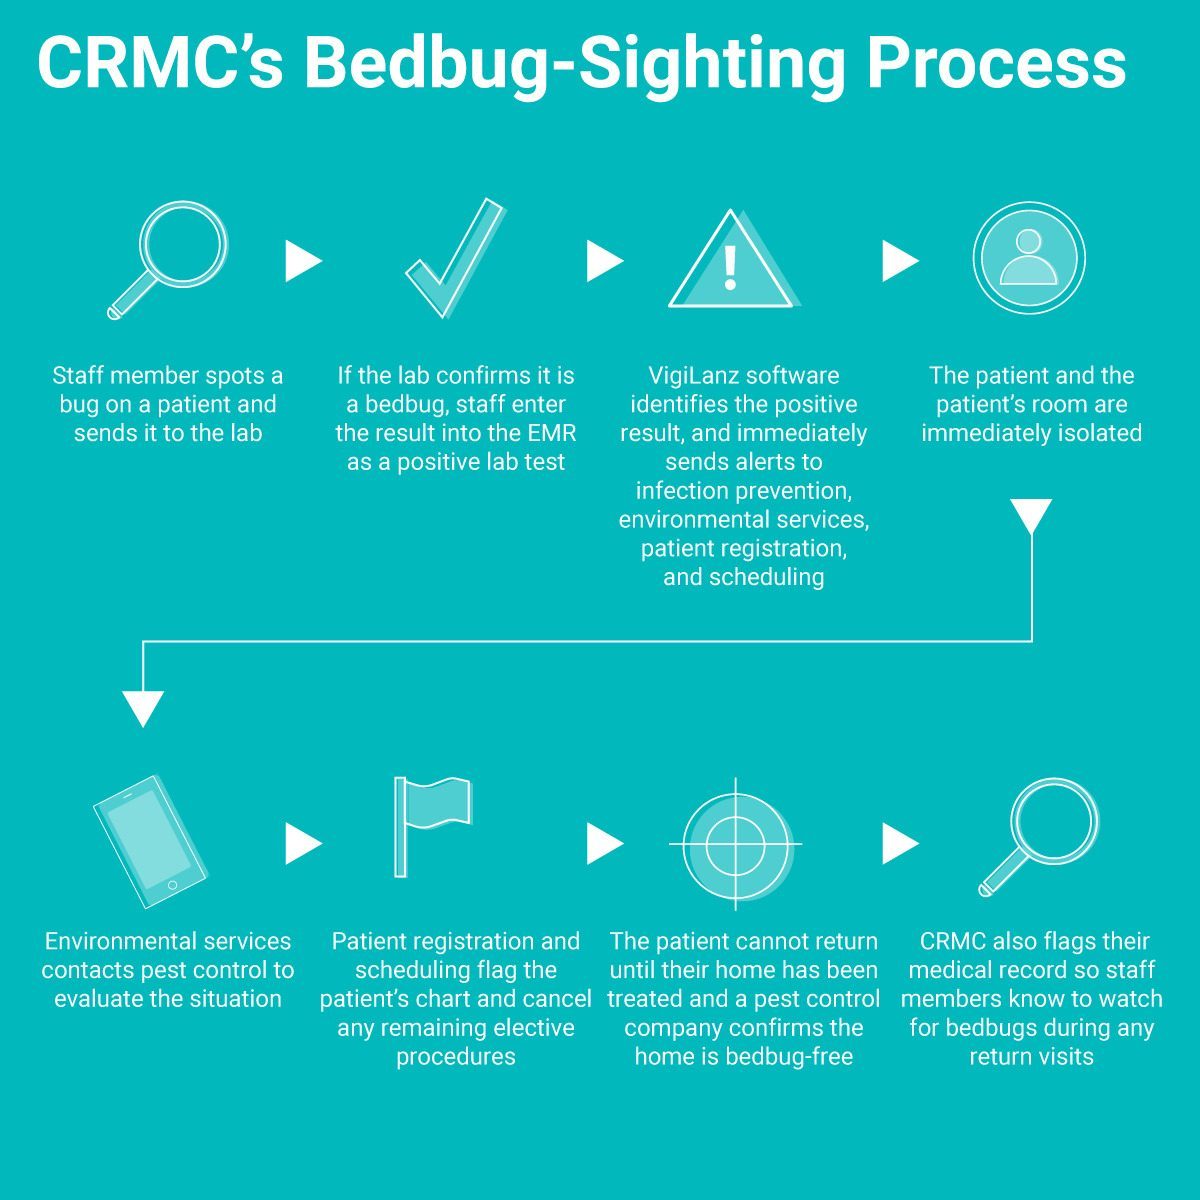 CRMC’s Bedbug-Sighting Process